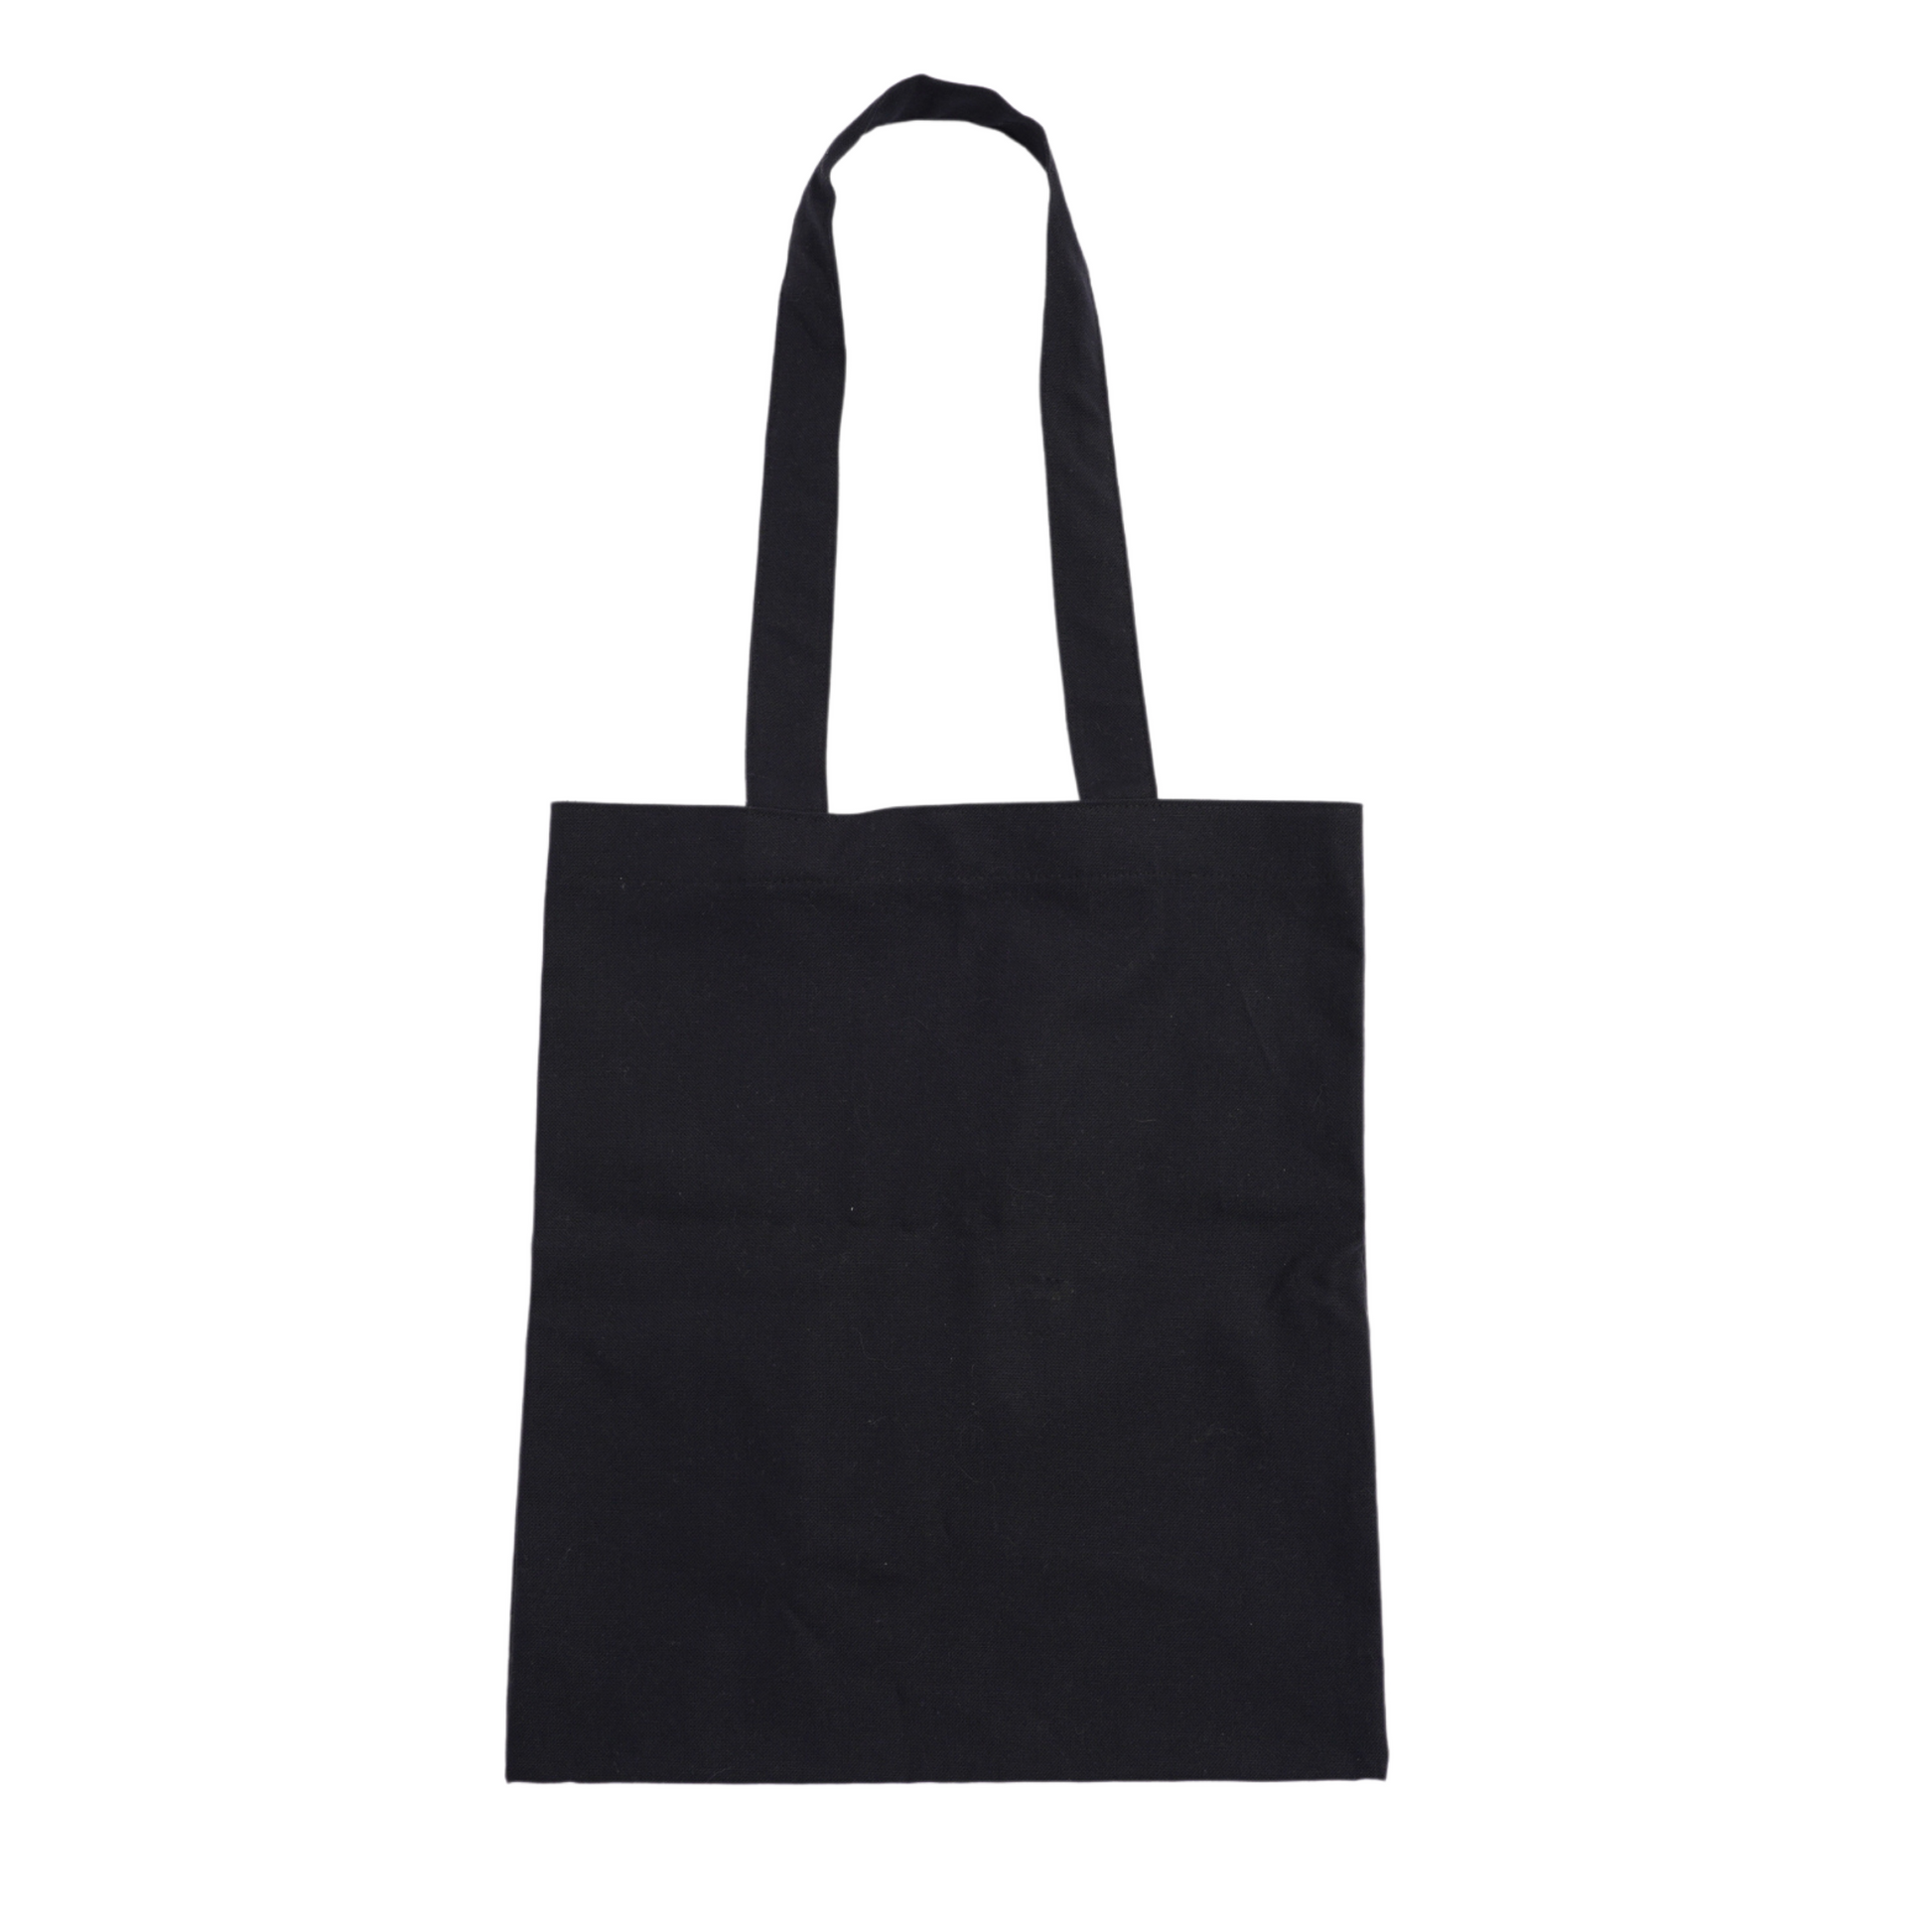 Loxato Tote Bag Negra - Bolsa Tela Negra - Bolsa de Algodón 100% - Tote Bag  Tela - Bolso